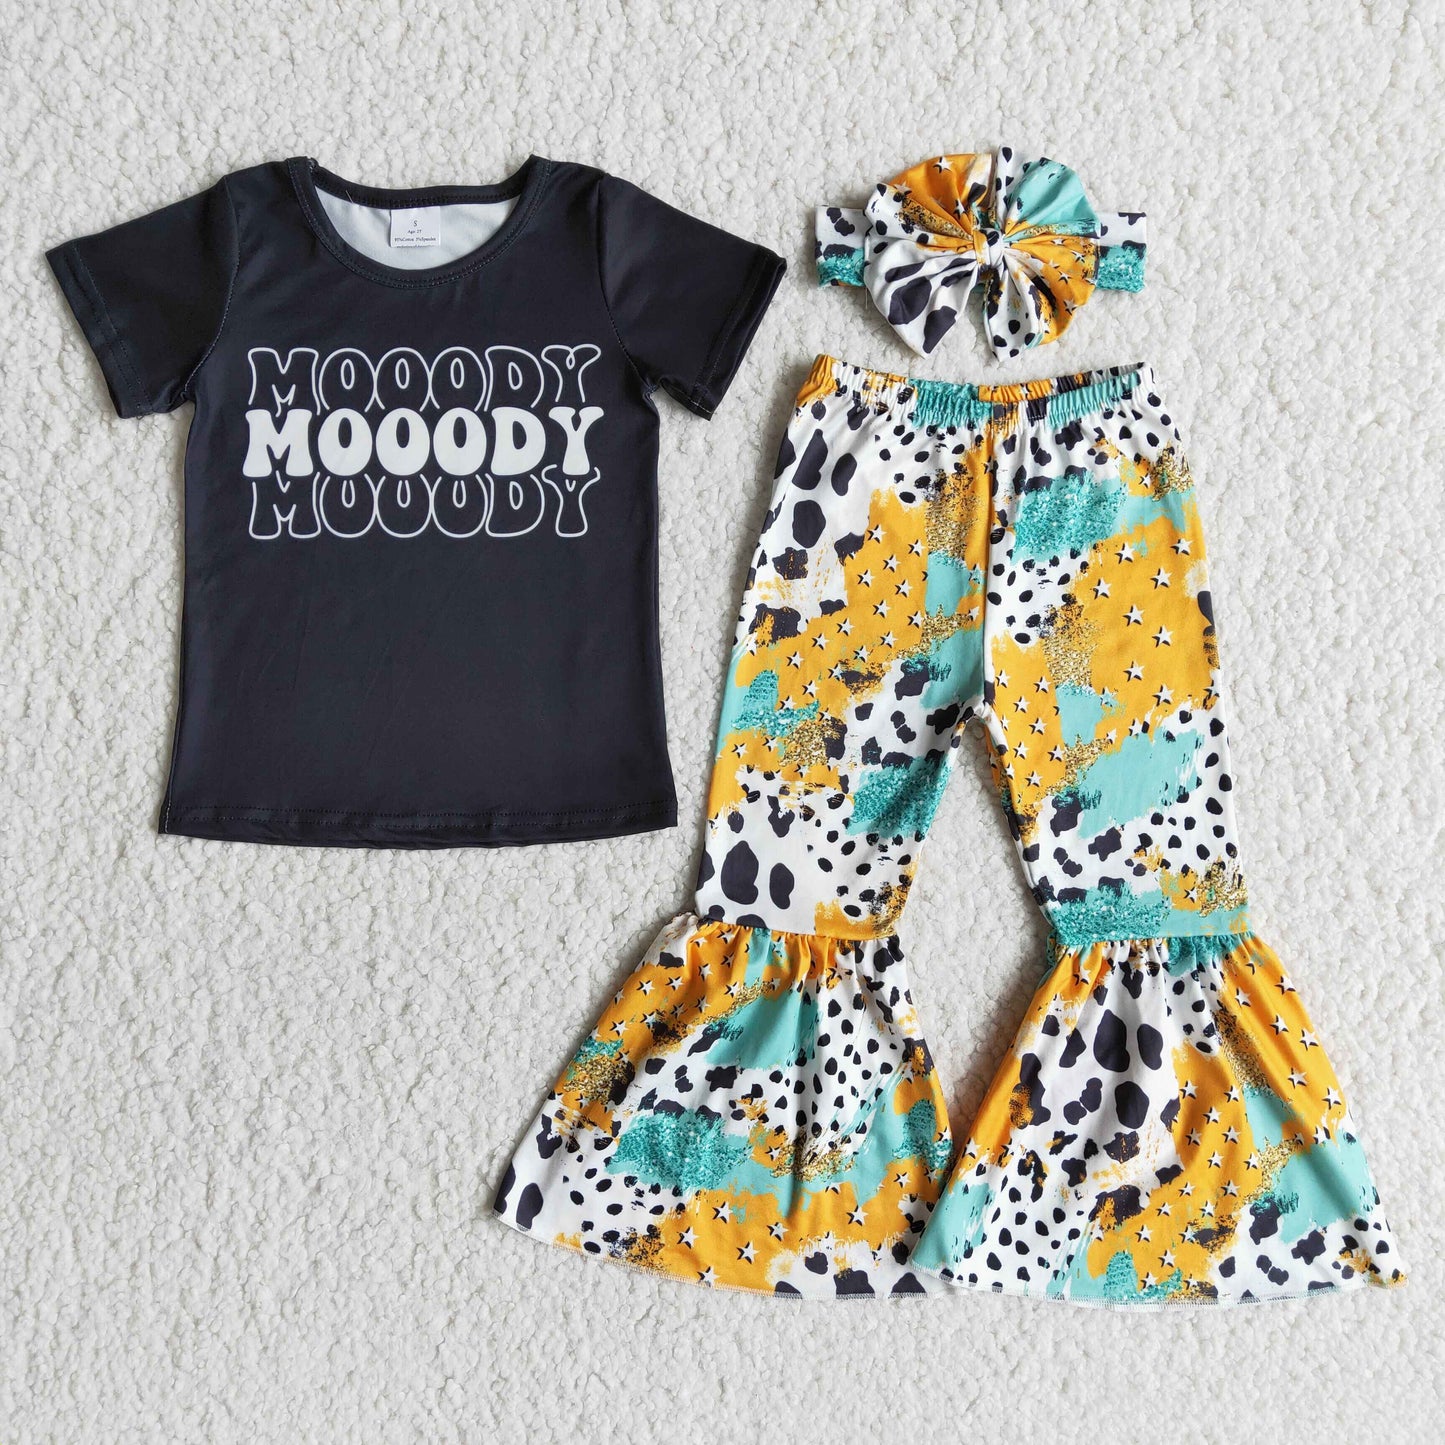 Moody black shirt cow print baby girls clothing set